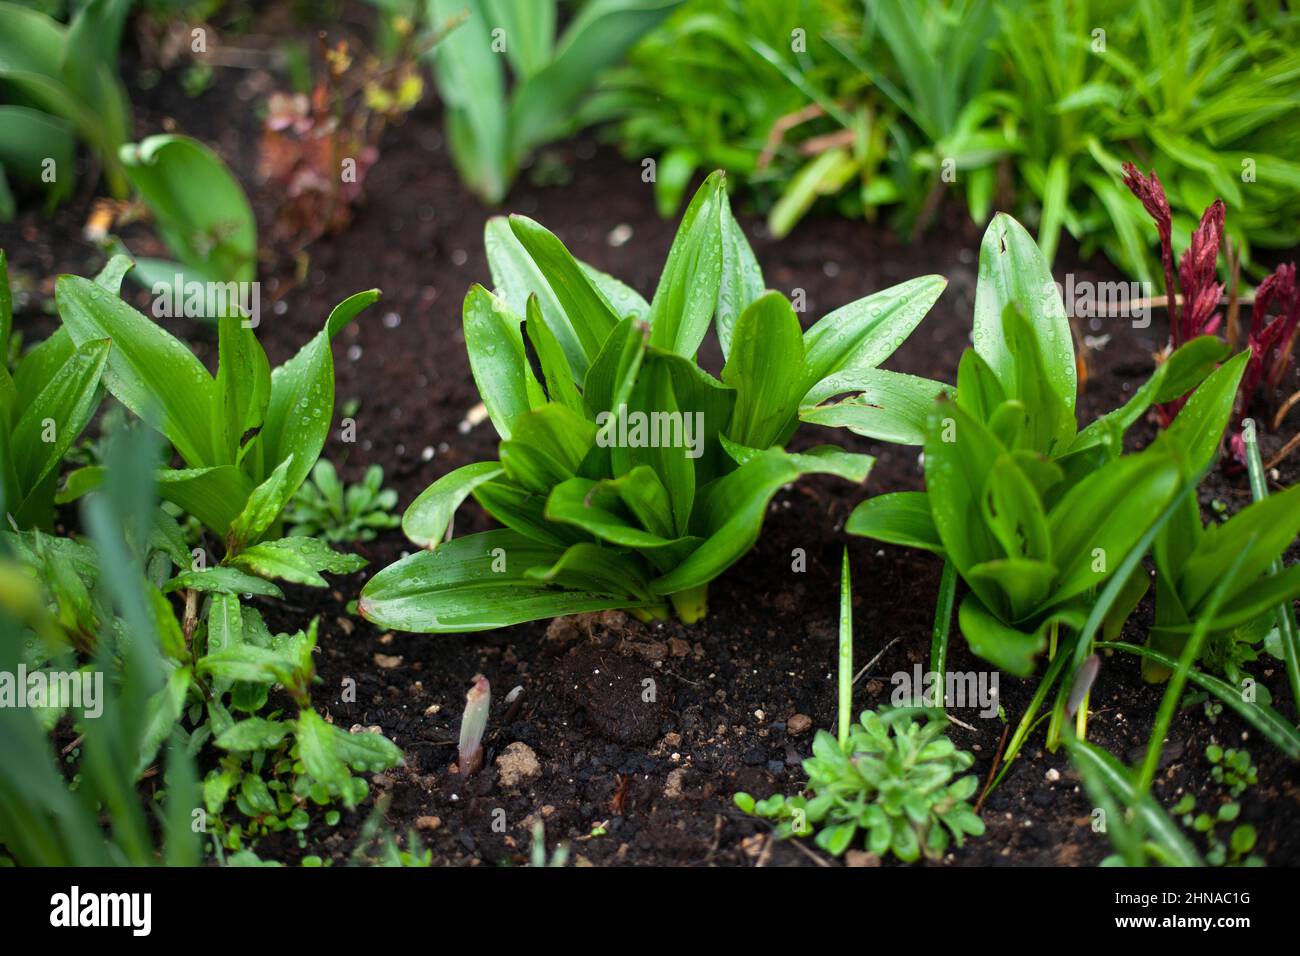 Plants in the garden. Green stems of garden plants. Stock Photo